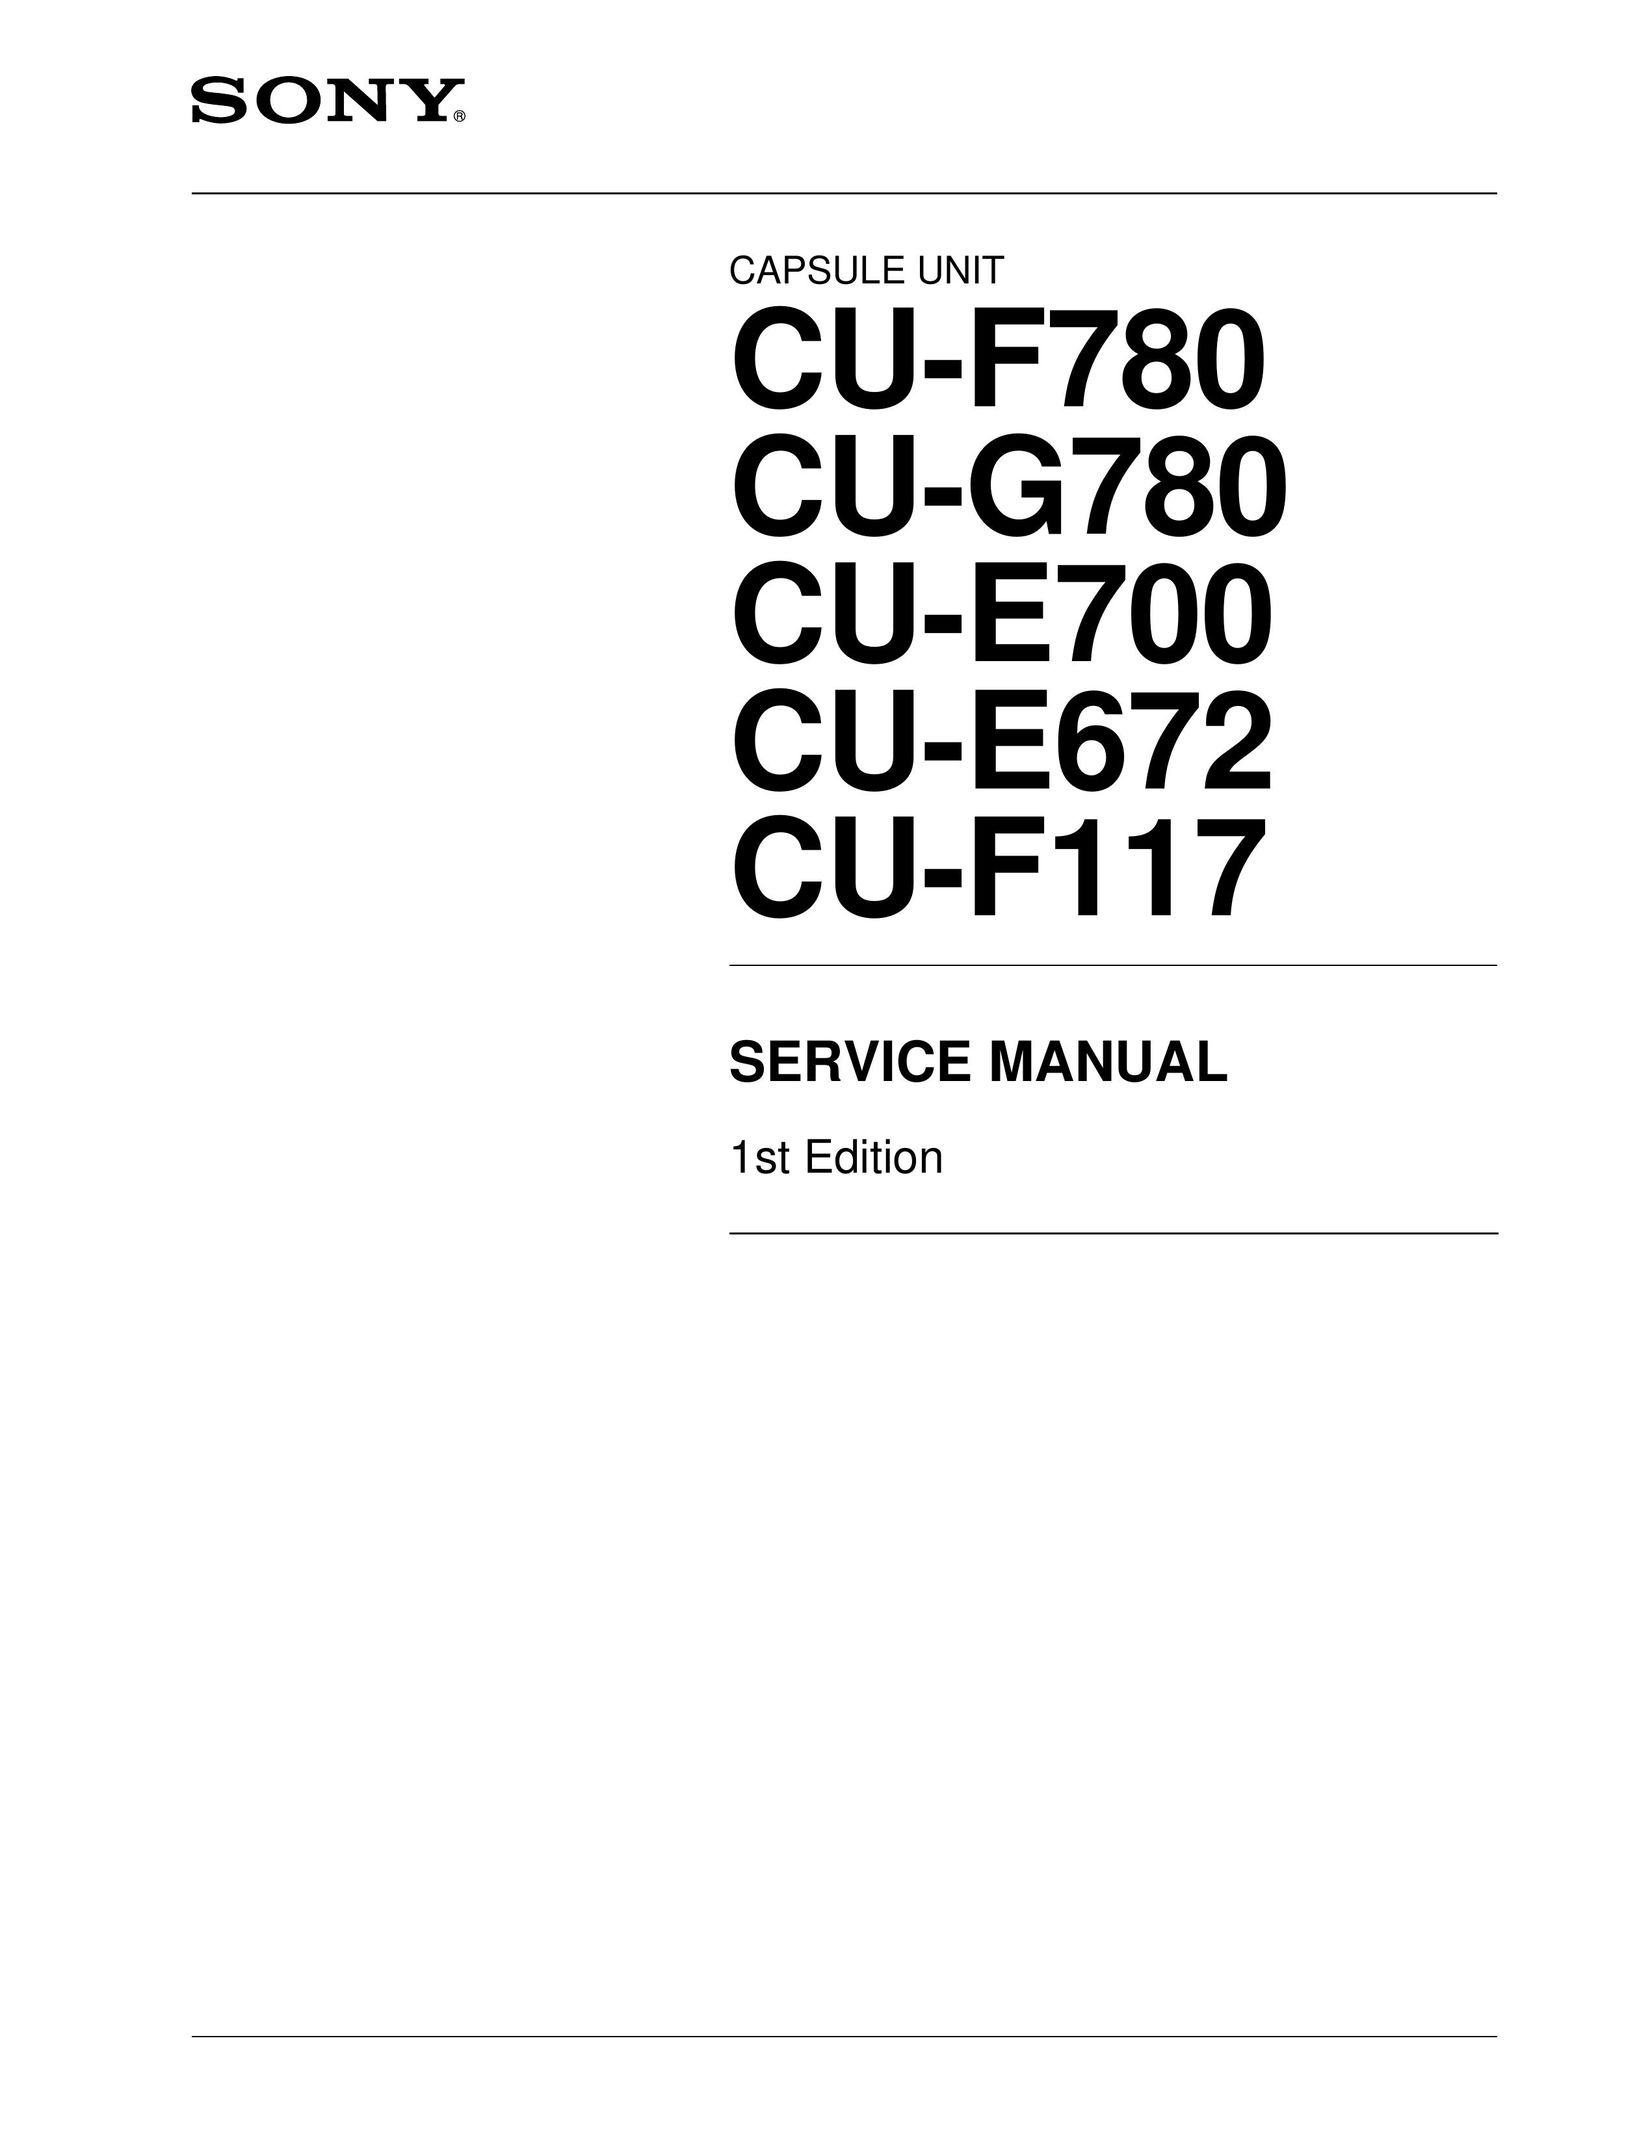 Sony G780 Satellite Radio User Manual